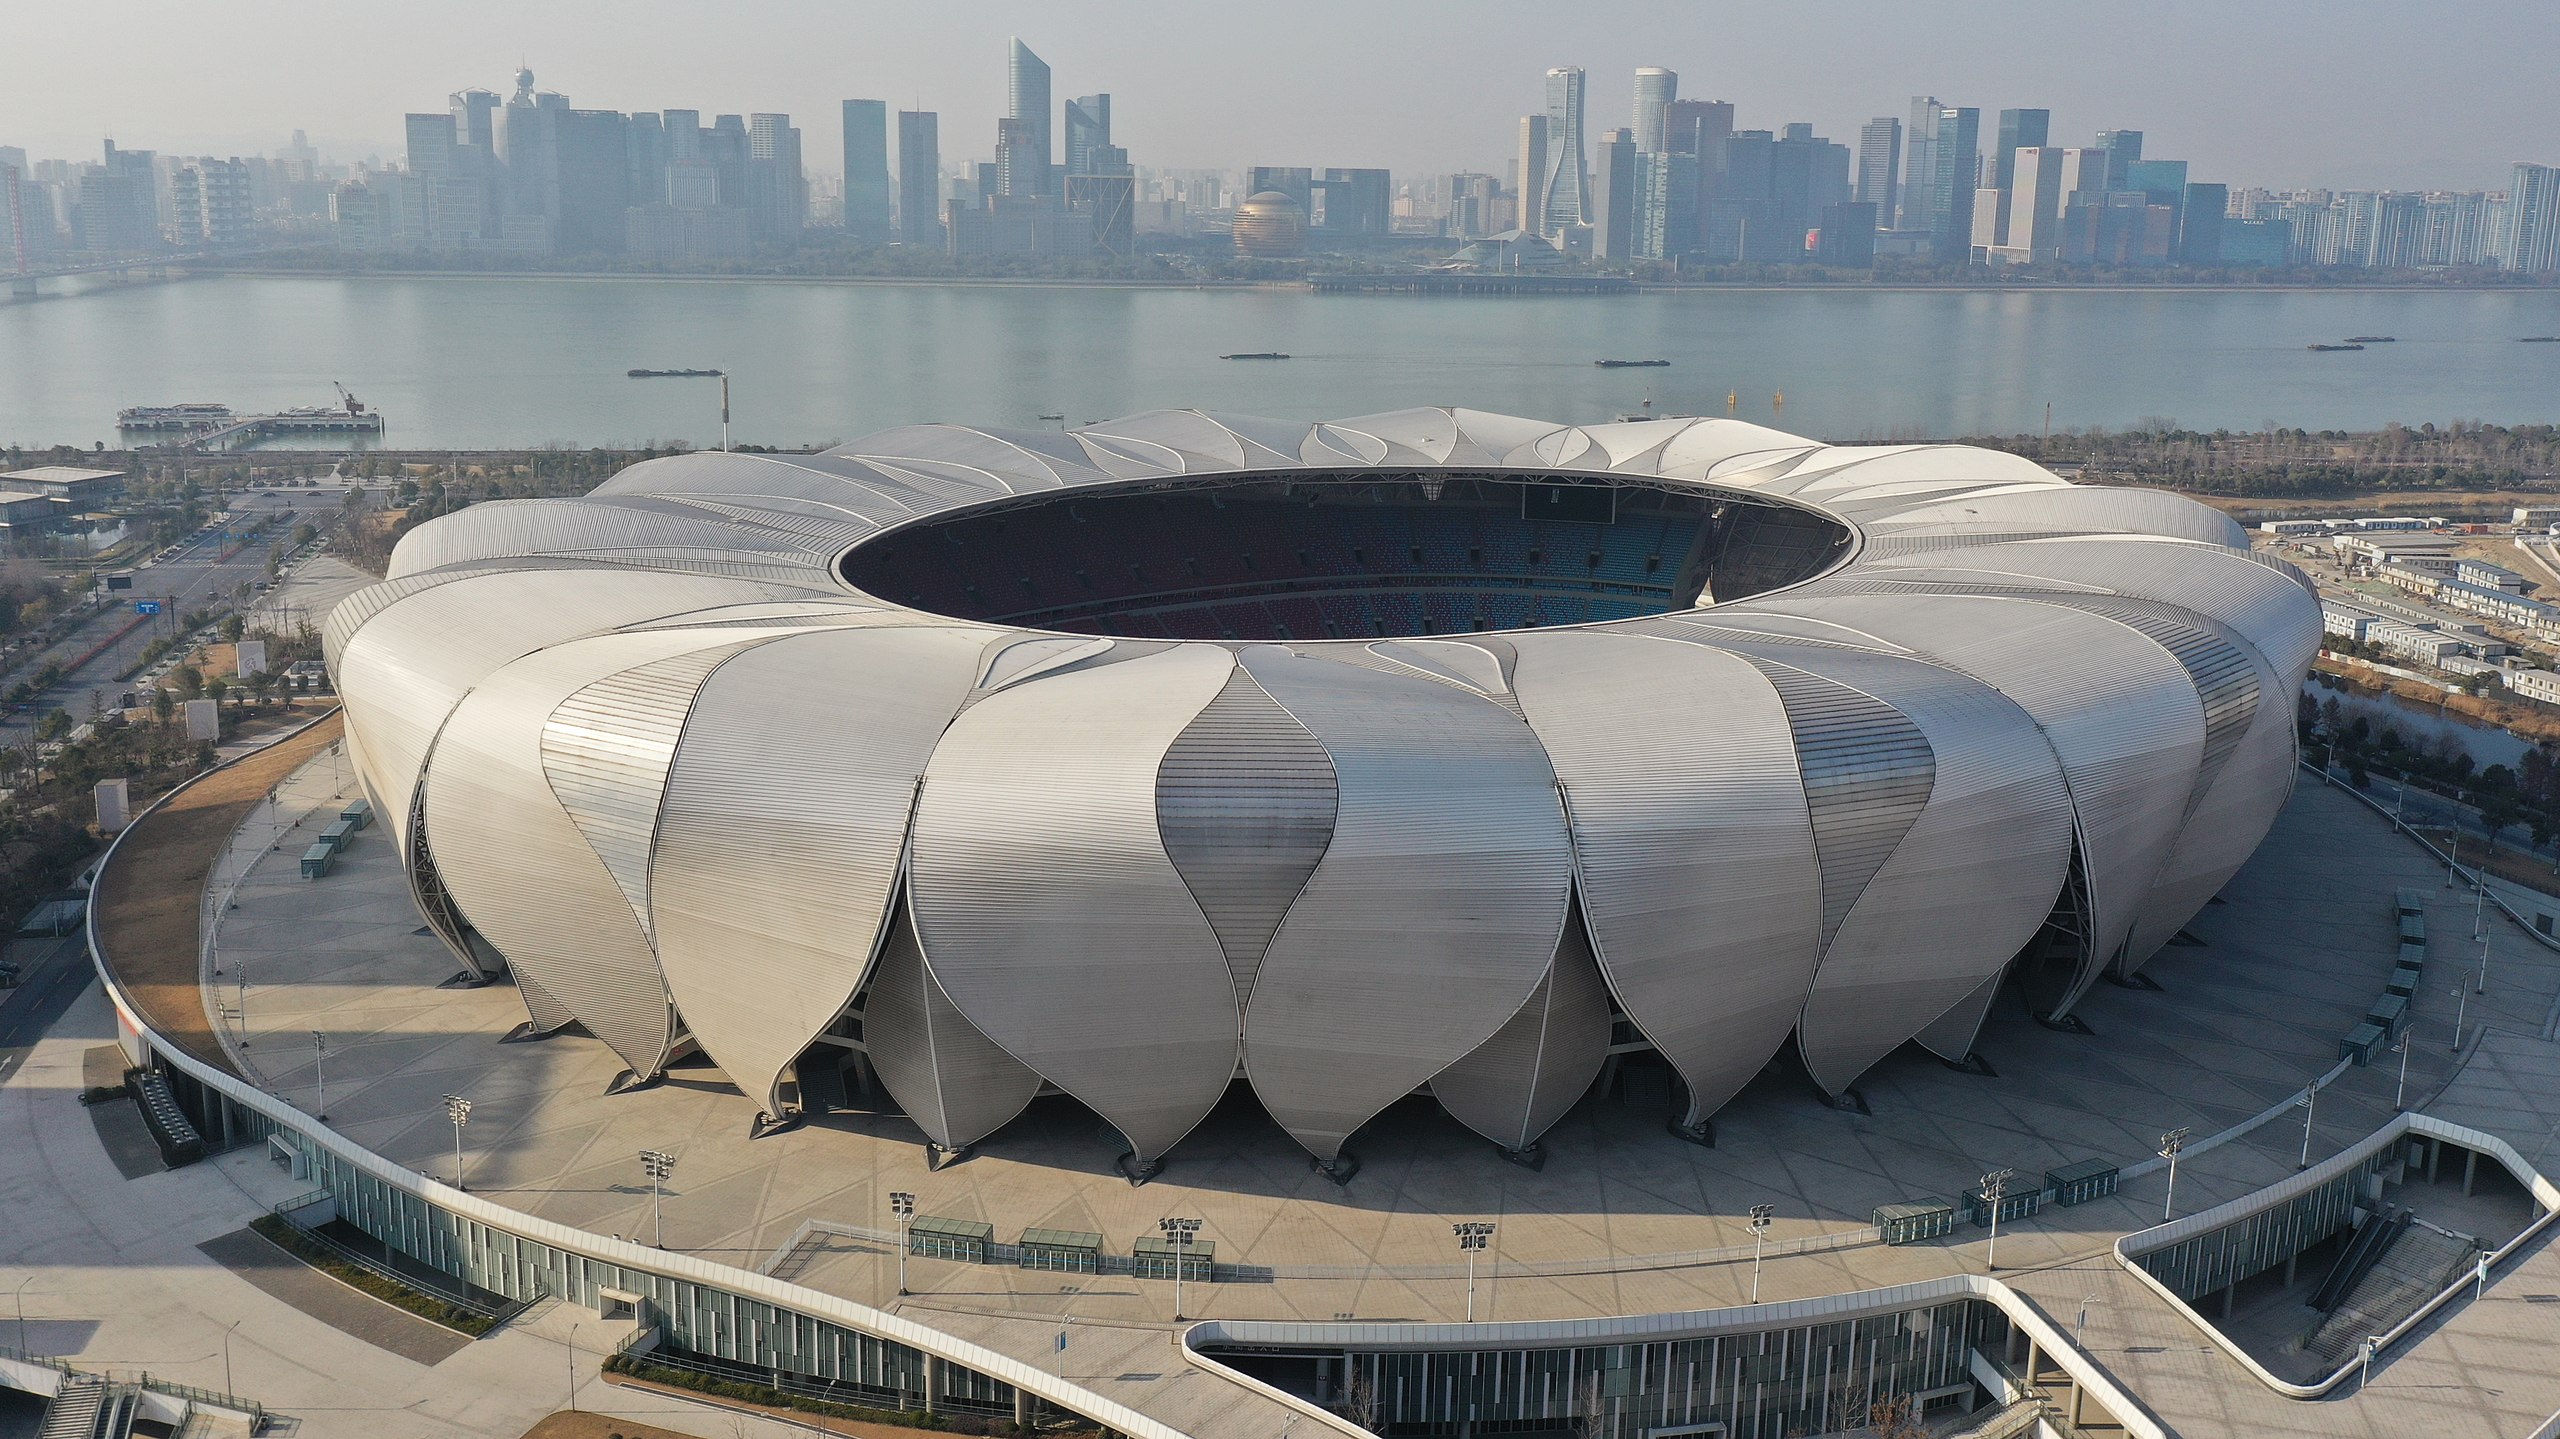 The Hangzhou Olympic Sports Center Stadium in Hangzhou, China.